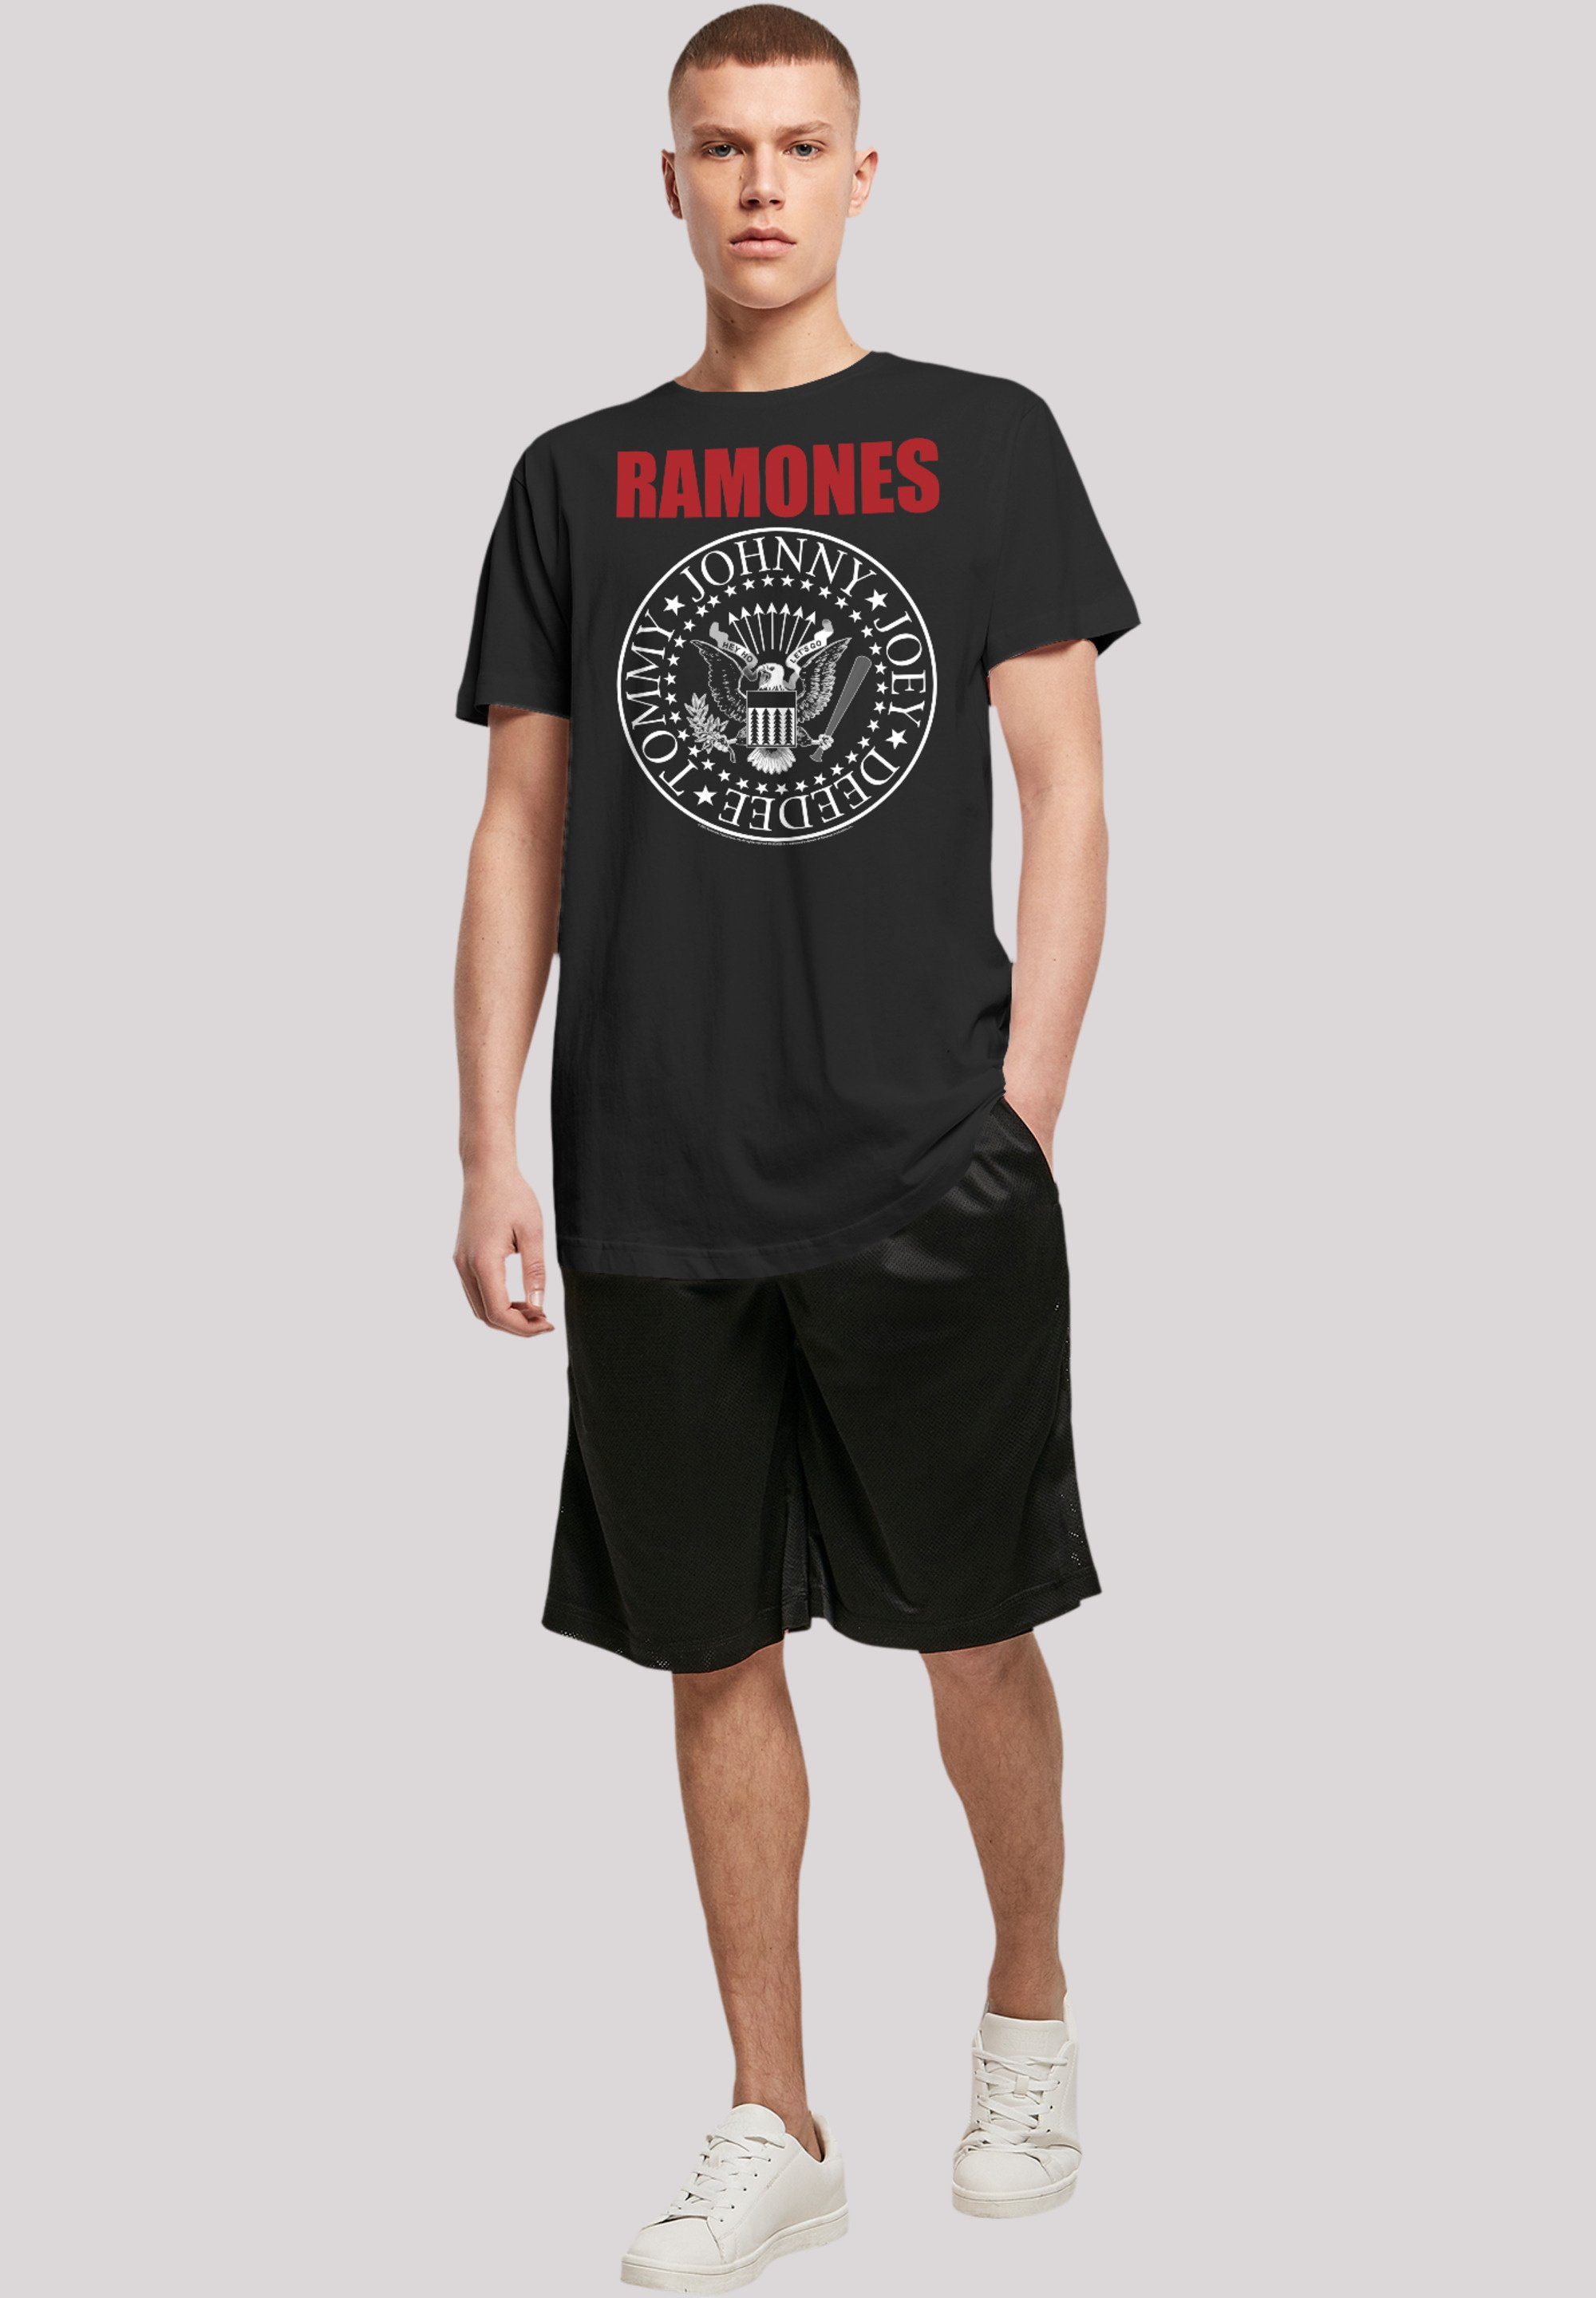 F4NT4STIC T-Shirt Ramones Rock Seal Band, Musik Premium Band Red Rock-Musik Text Qualität